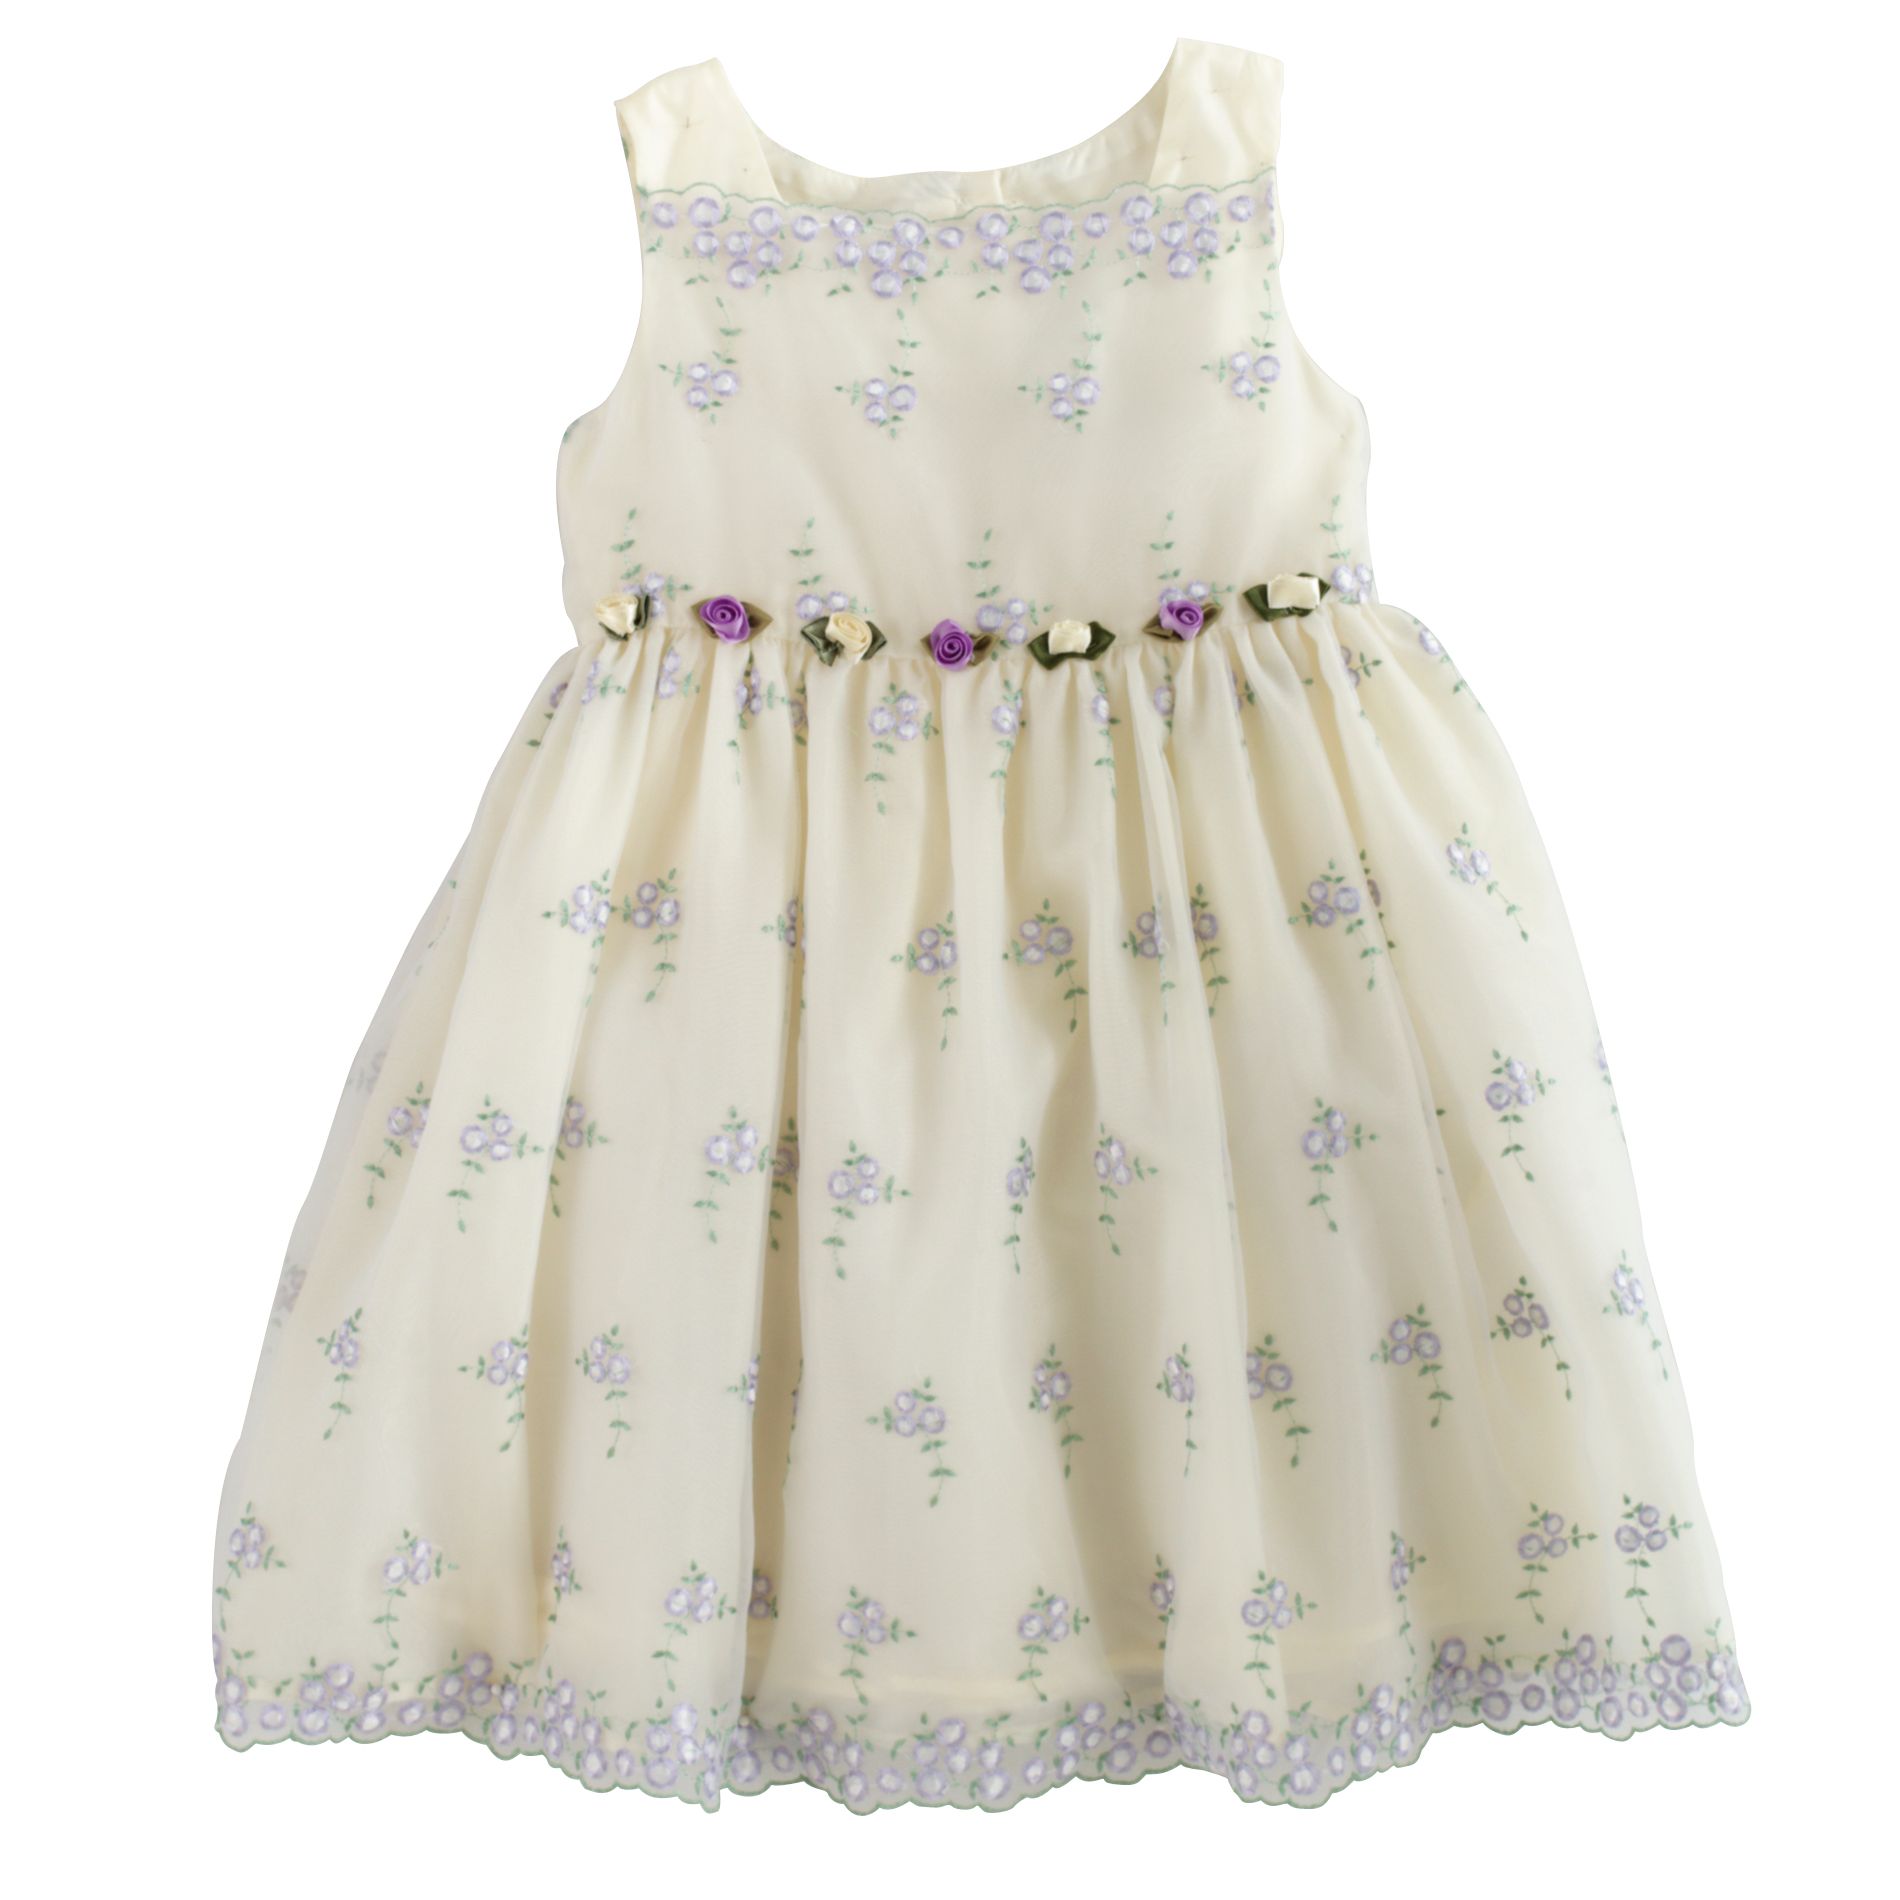 Basic Editions Girl's Sleeveless Chiffon Dress with Rosettes